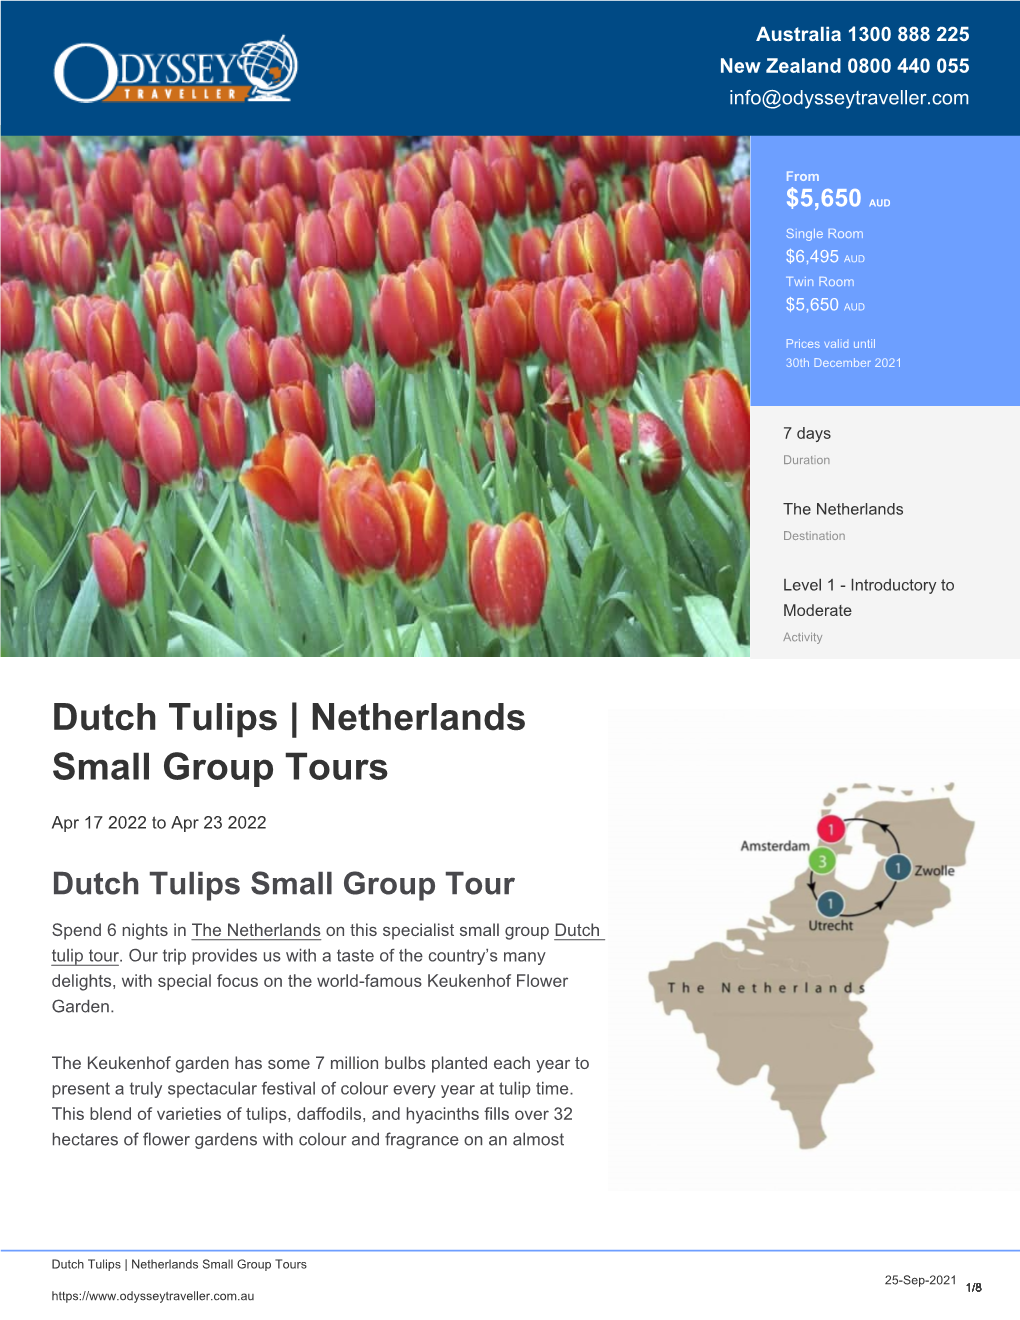 Dutch Tulips | Netherlands Escorted Small